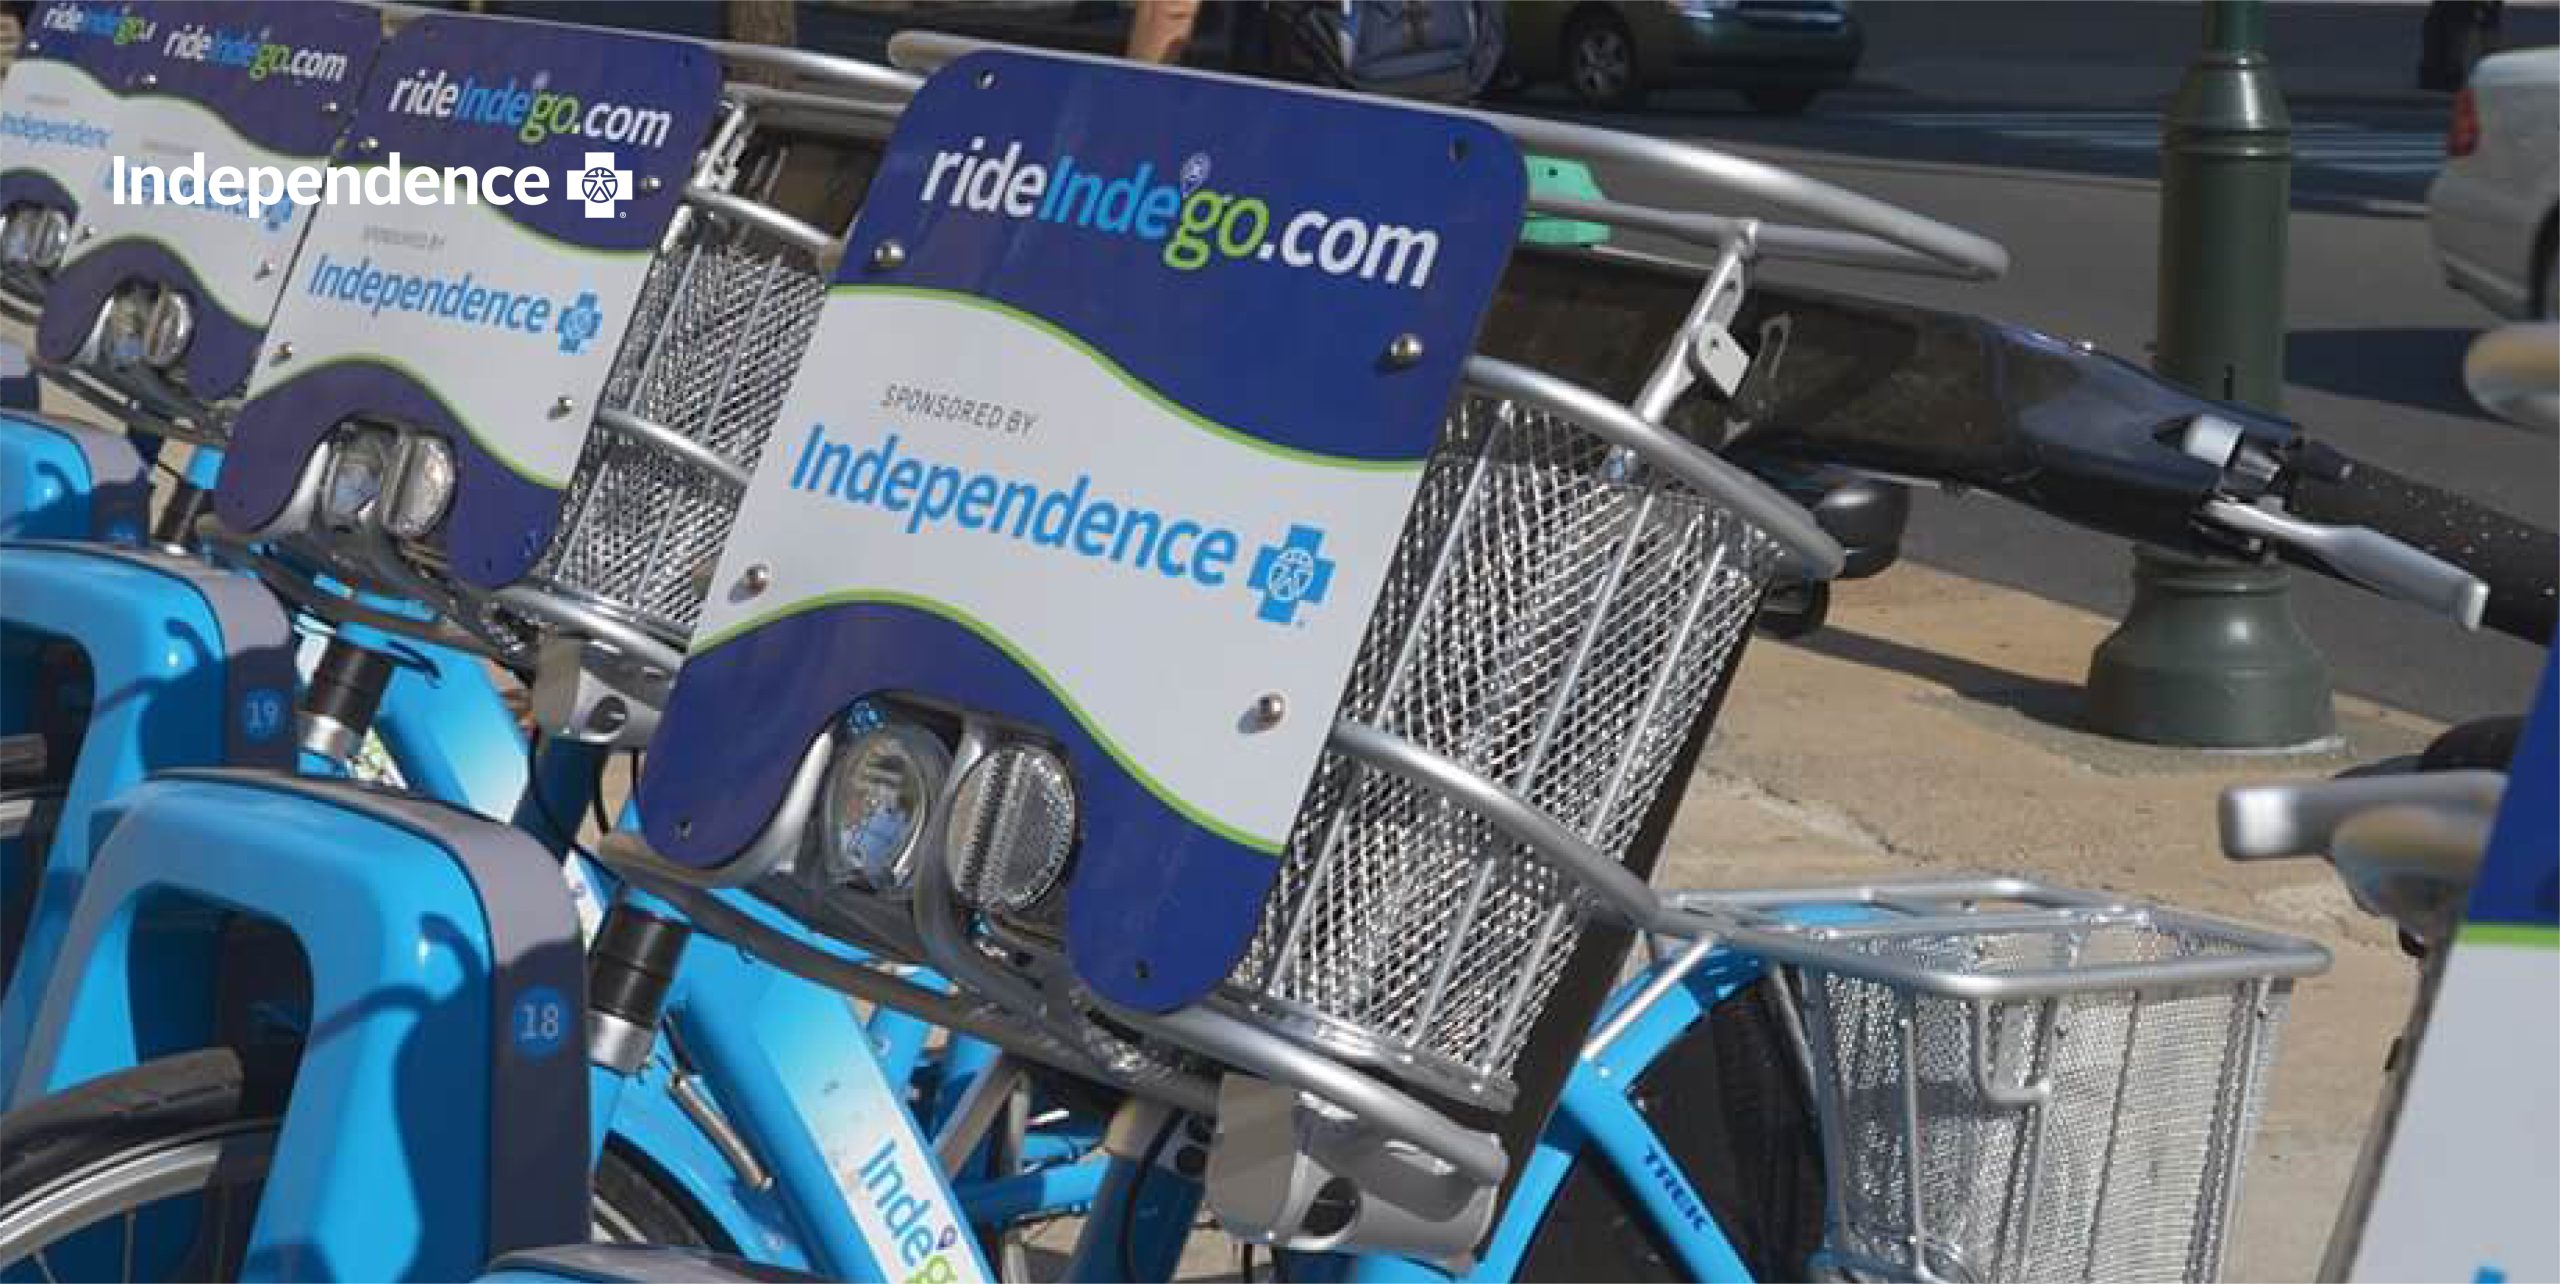 Close up of Indego bike handles with rideindego.com signage on basket